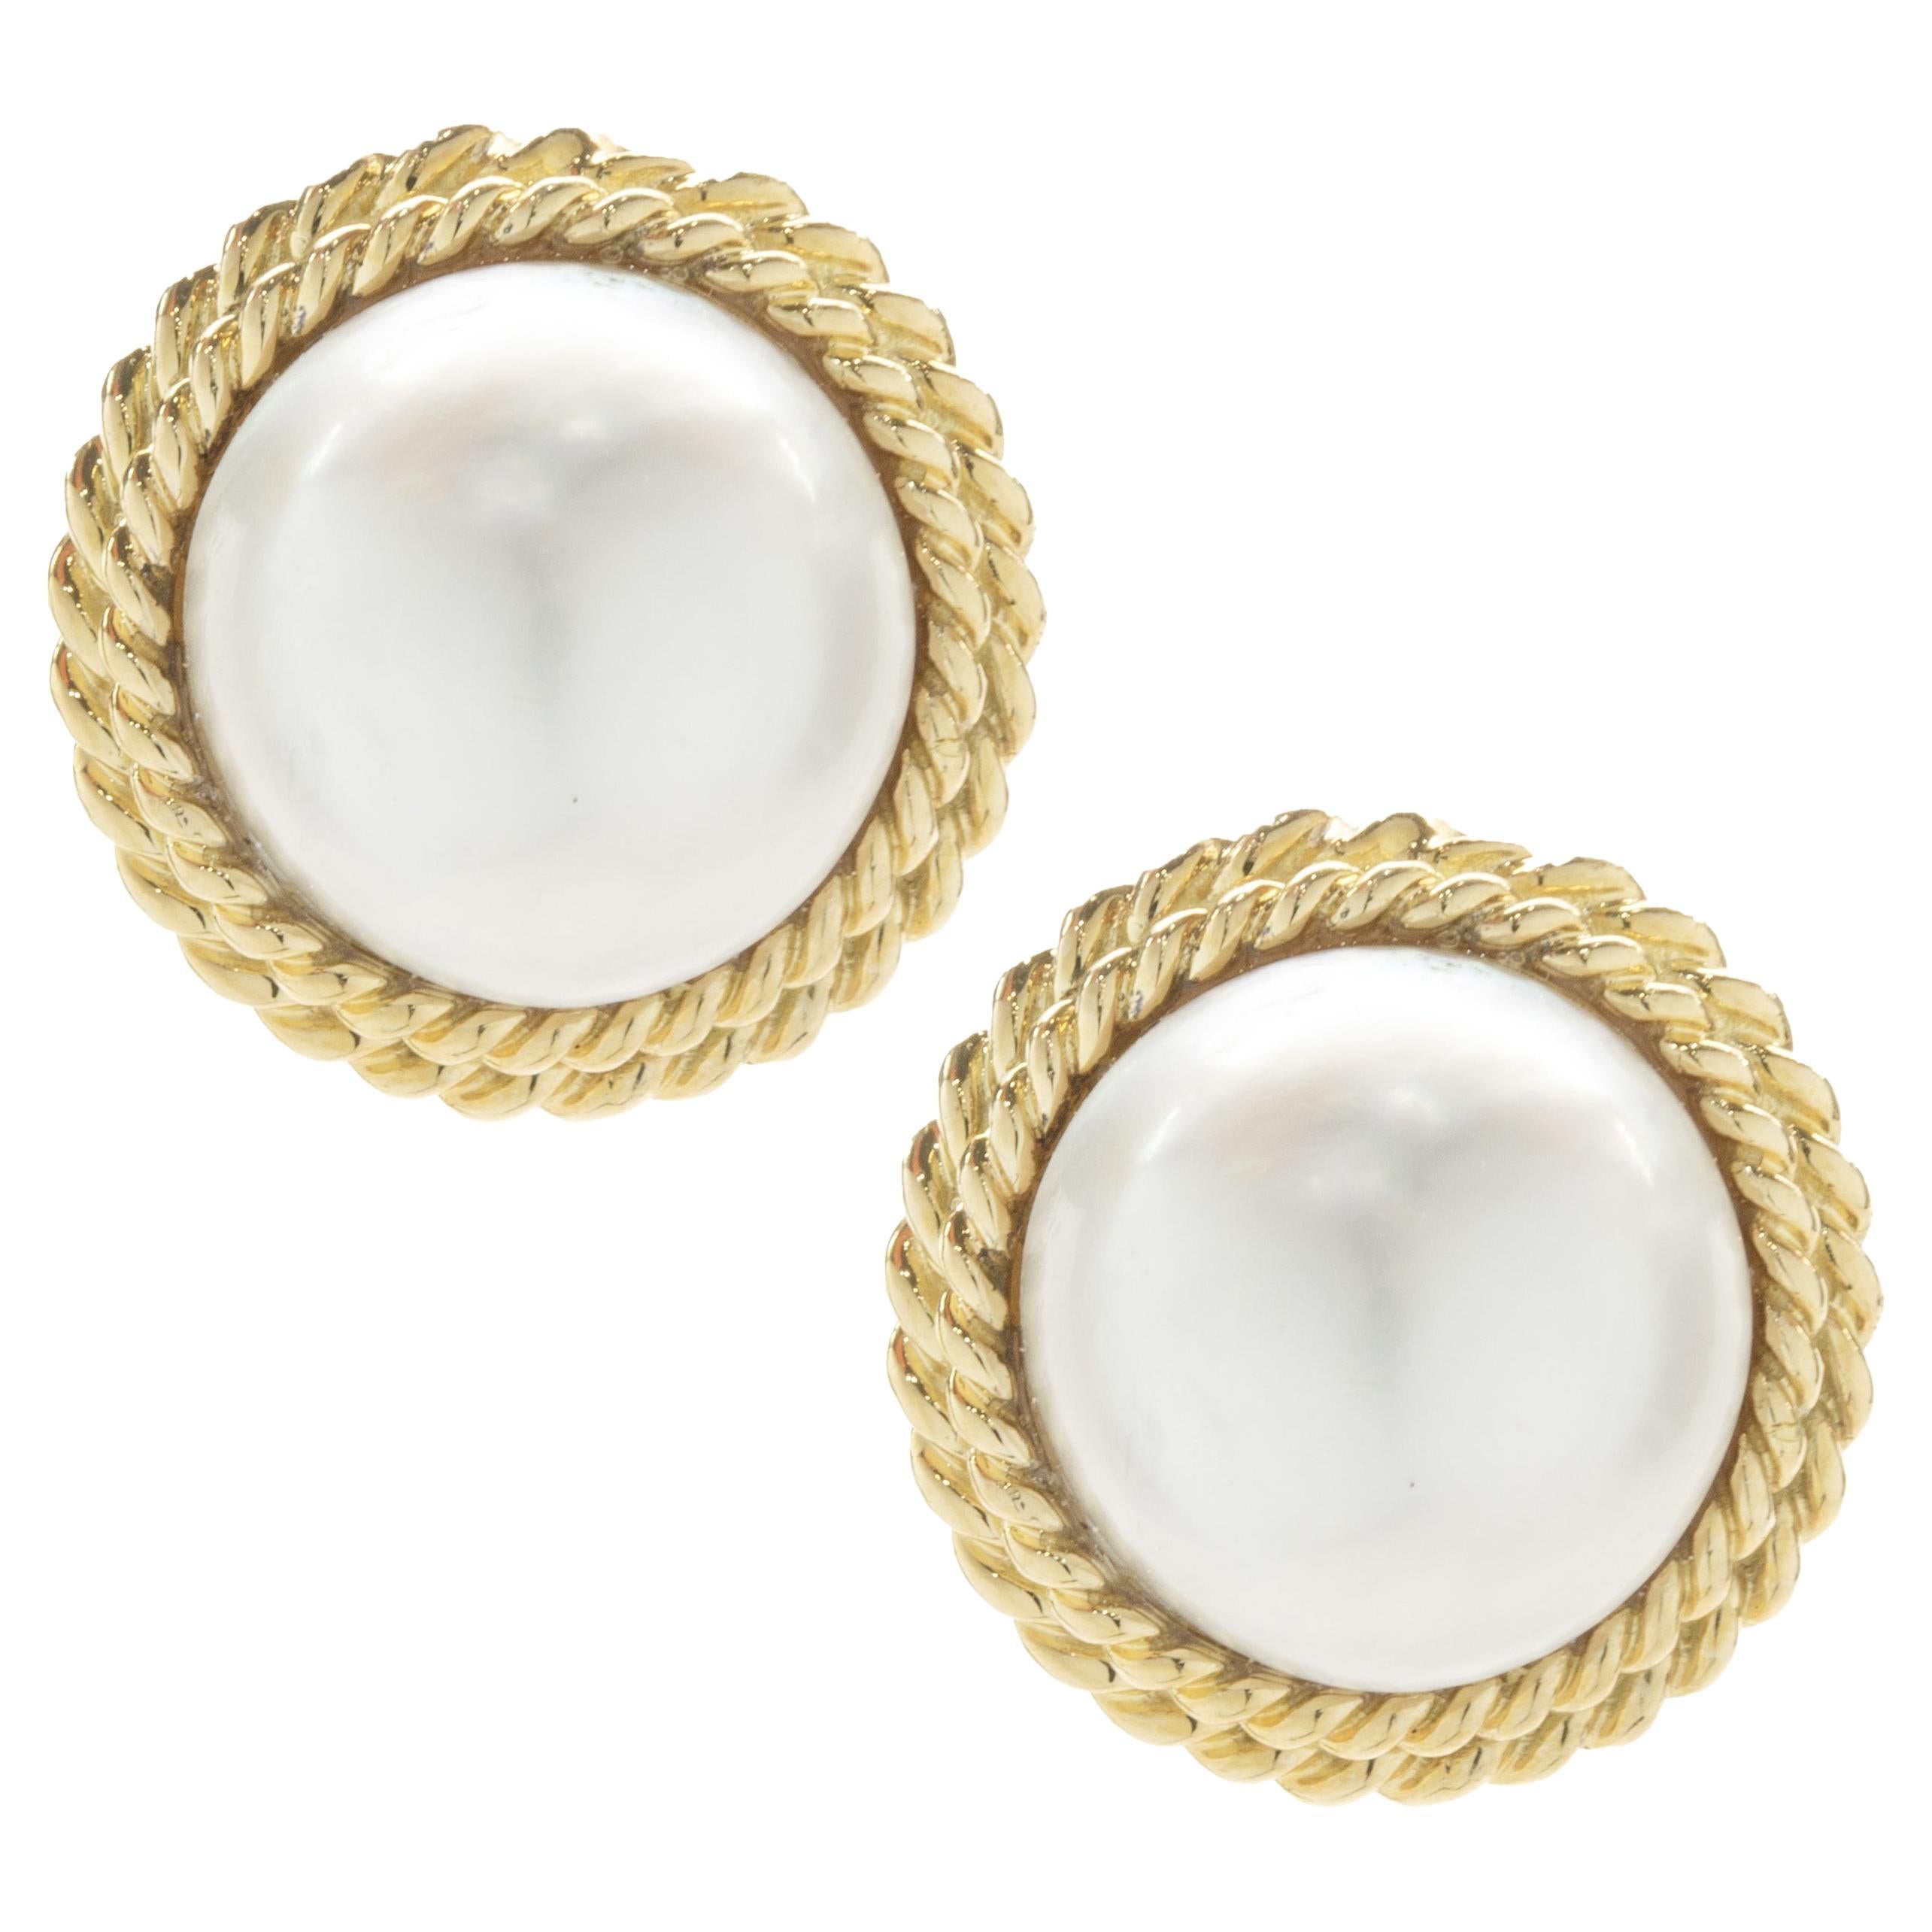 14 Karat Yellow Gold Mabe Pearl Stud Earrings